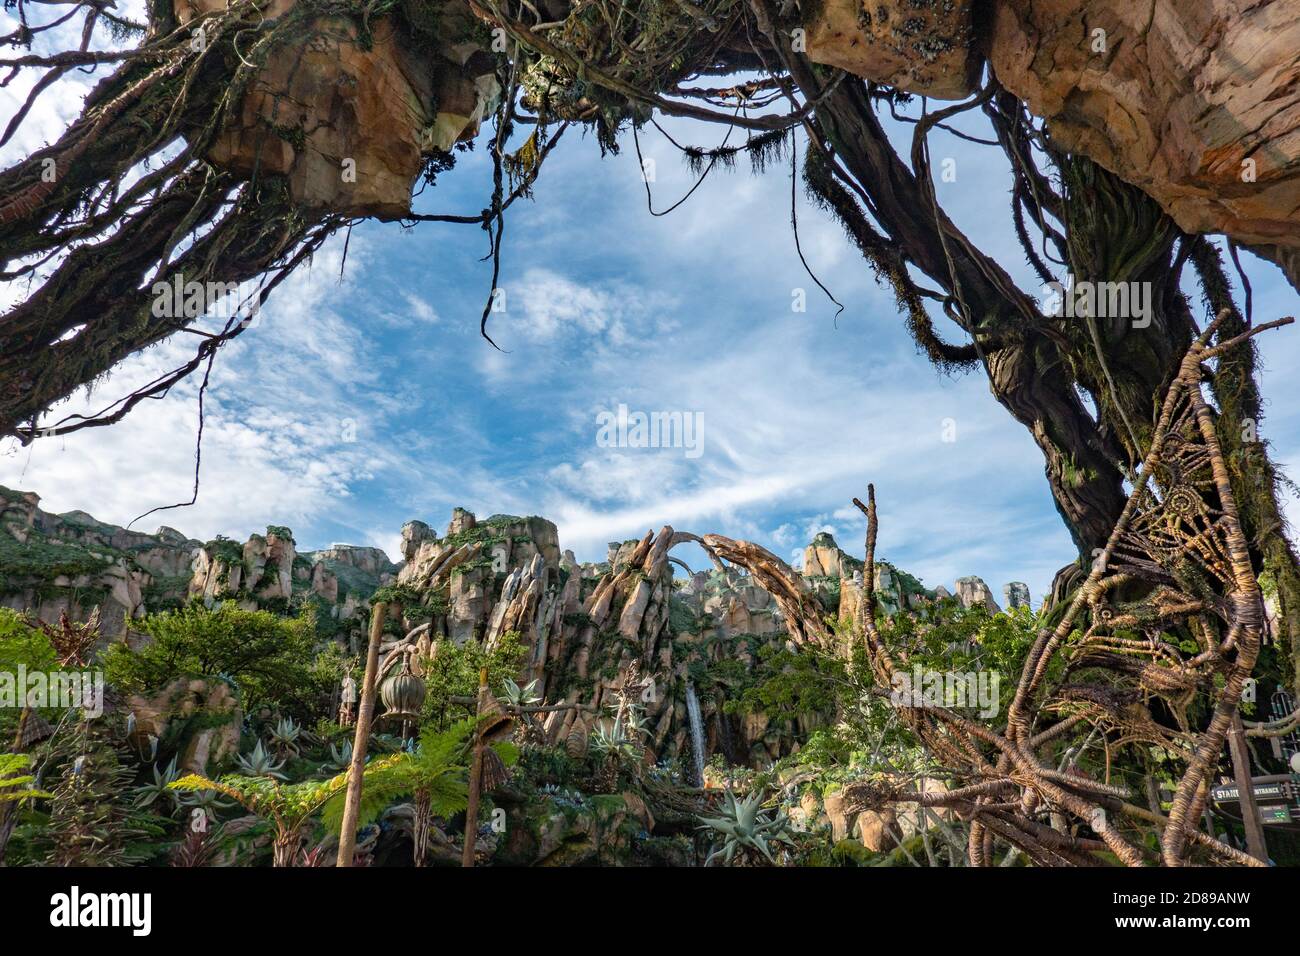 Avatar Movie Style Jungle Landscape Stock Illustration 50327668   Shutterstock